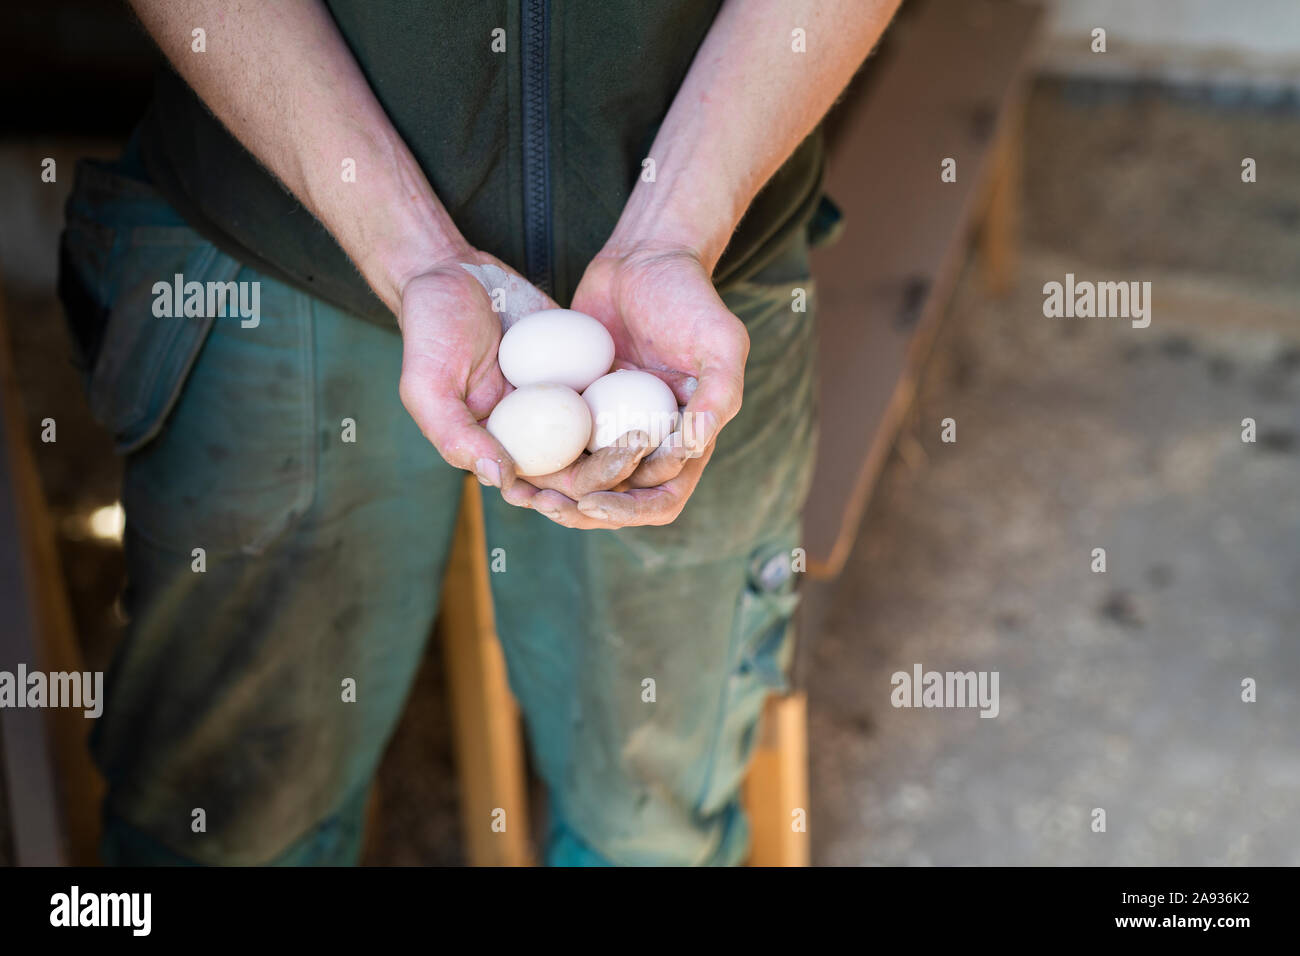 Hand holding eggs Stock Photo